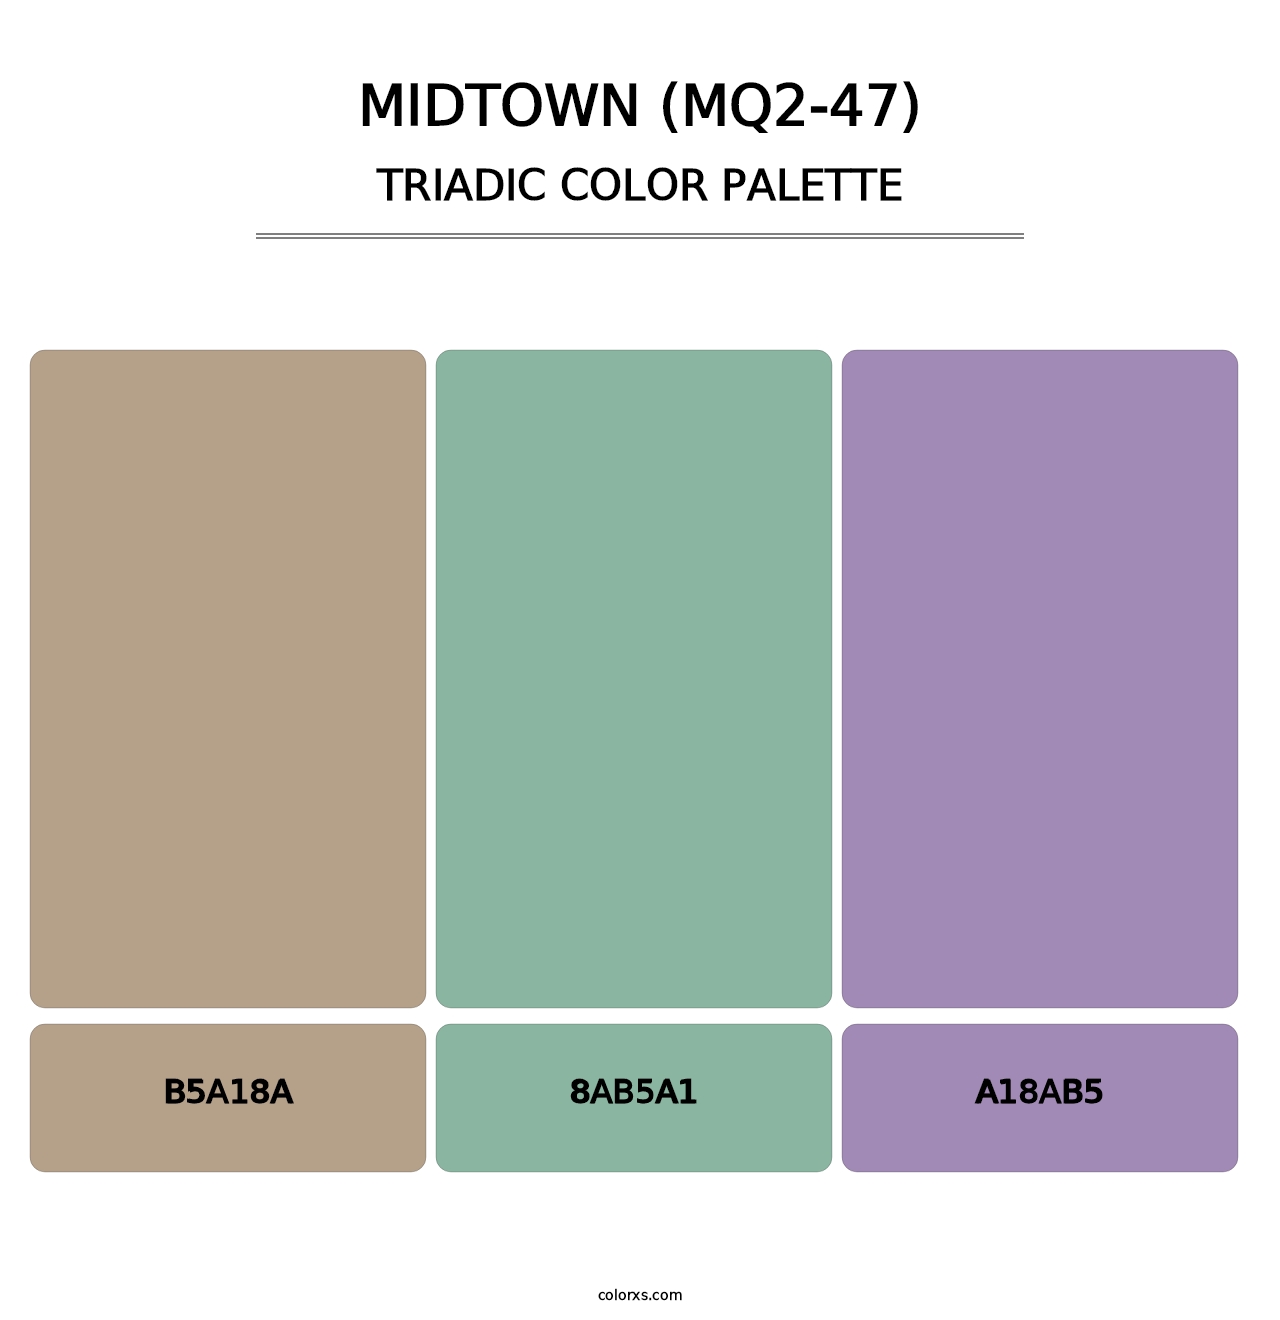 Midtown (MQ2-47) - Triadic Color Palette